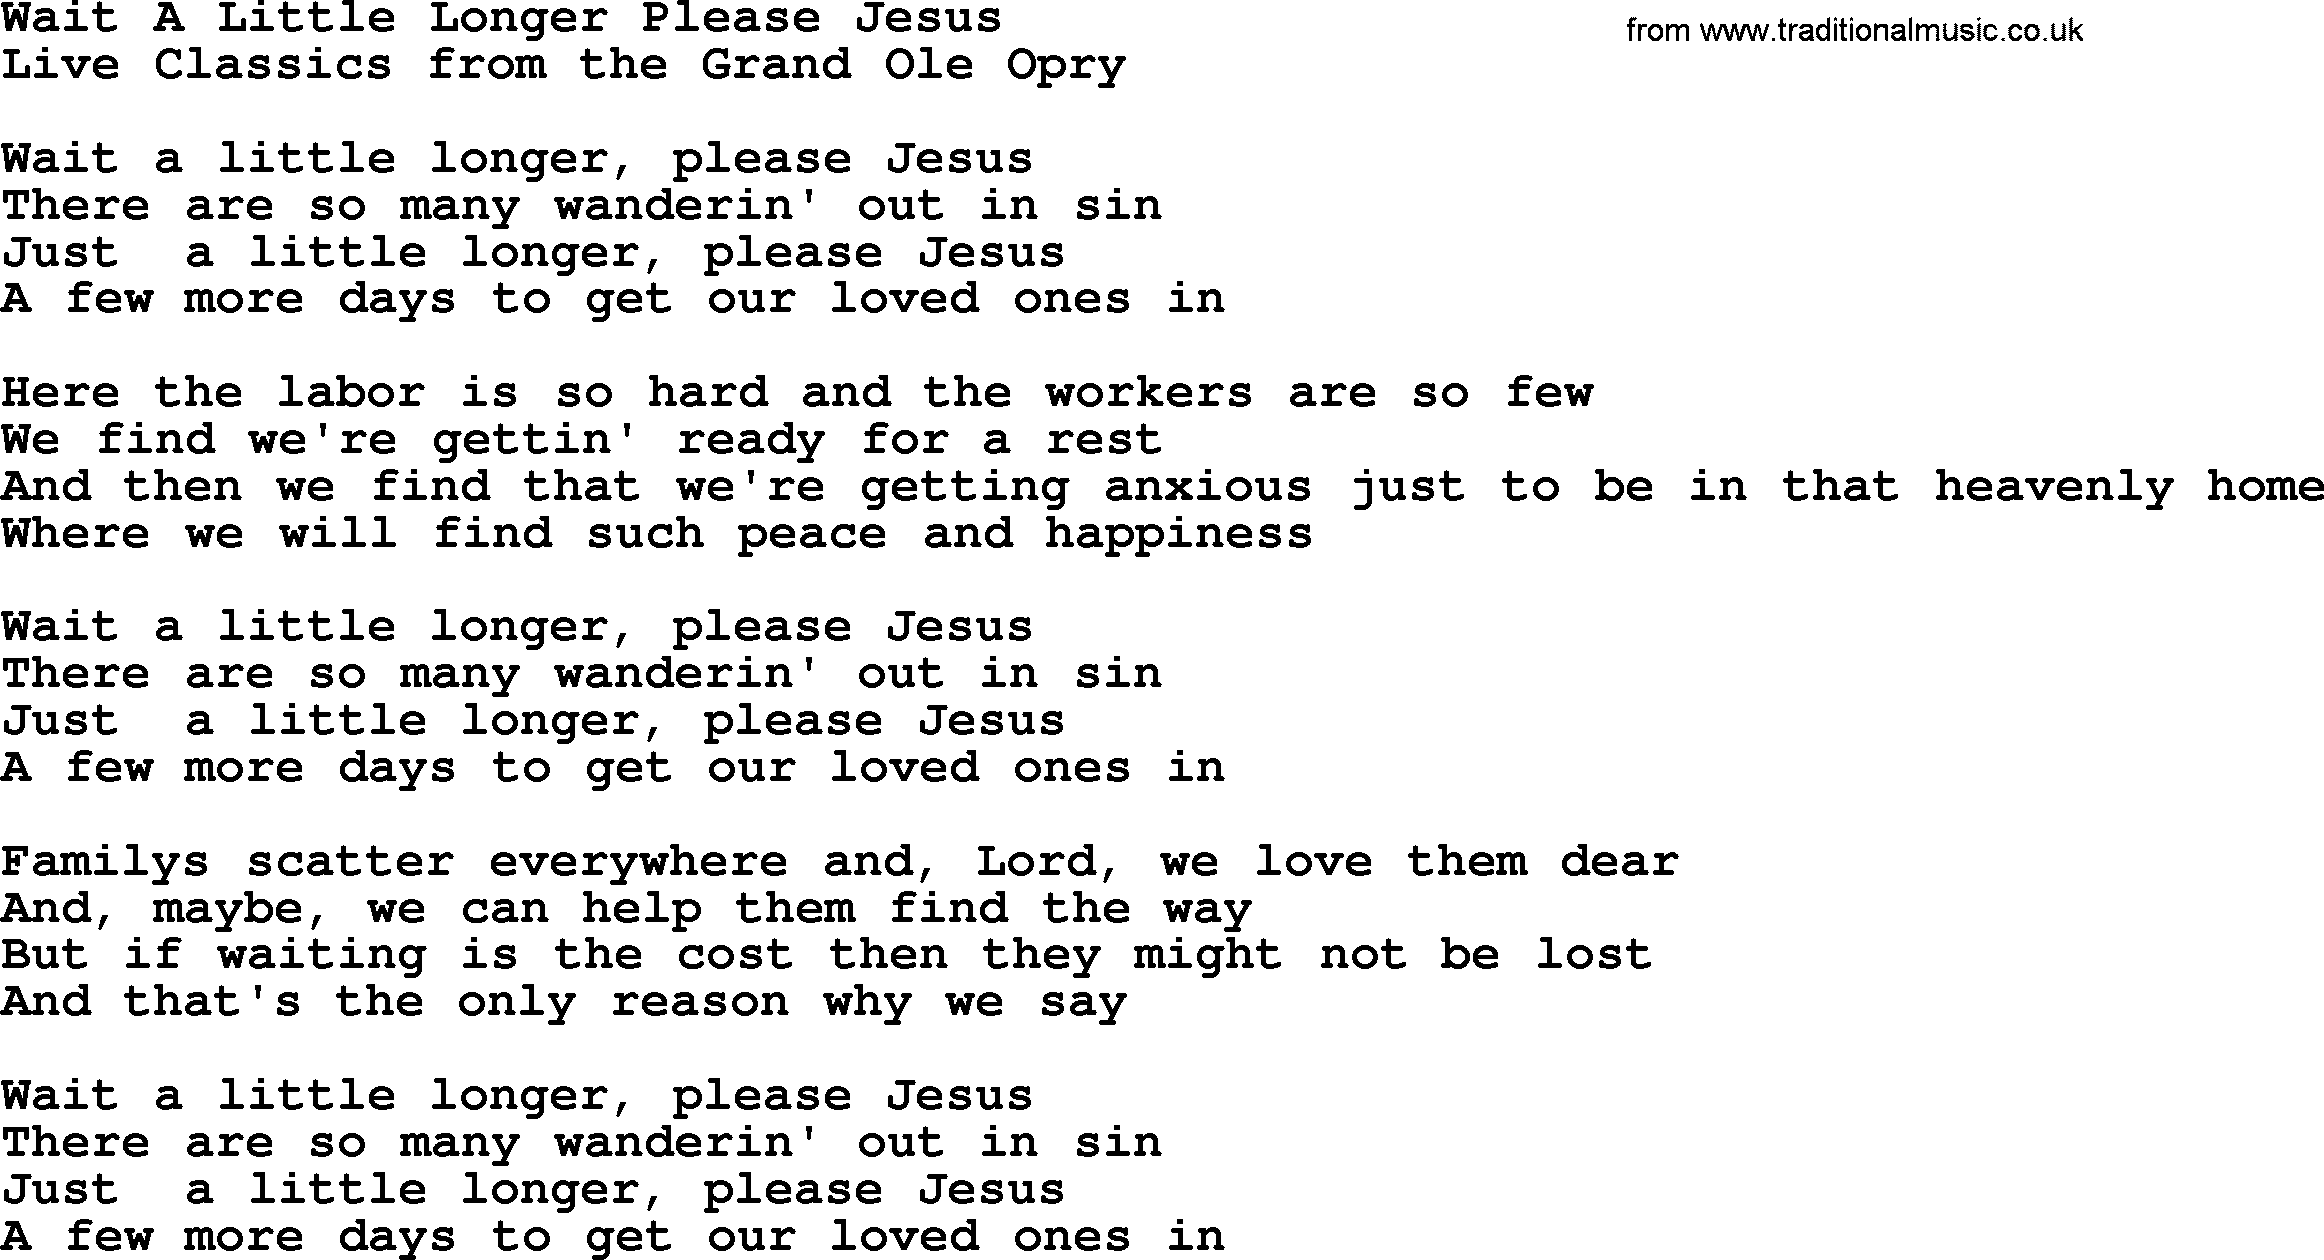 Marty Robbins song: Wait A Little Longer Please Jesus, lyrics